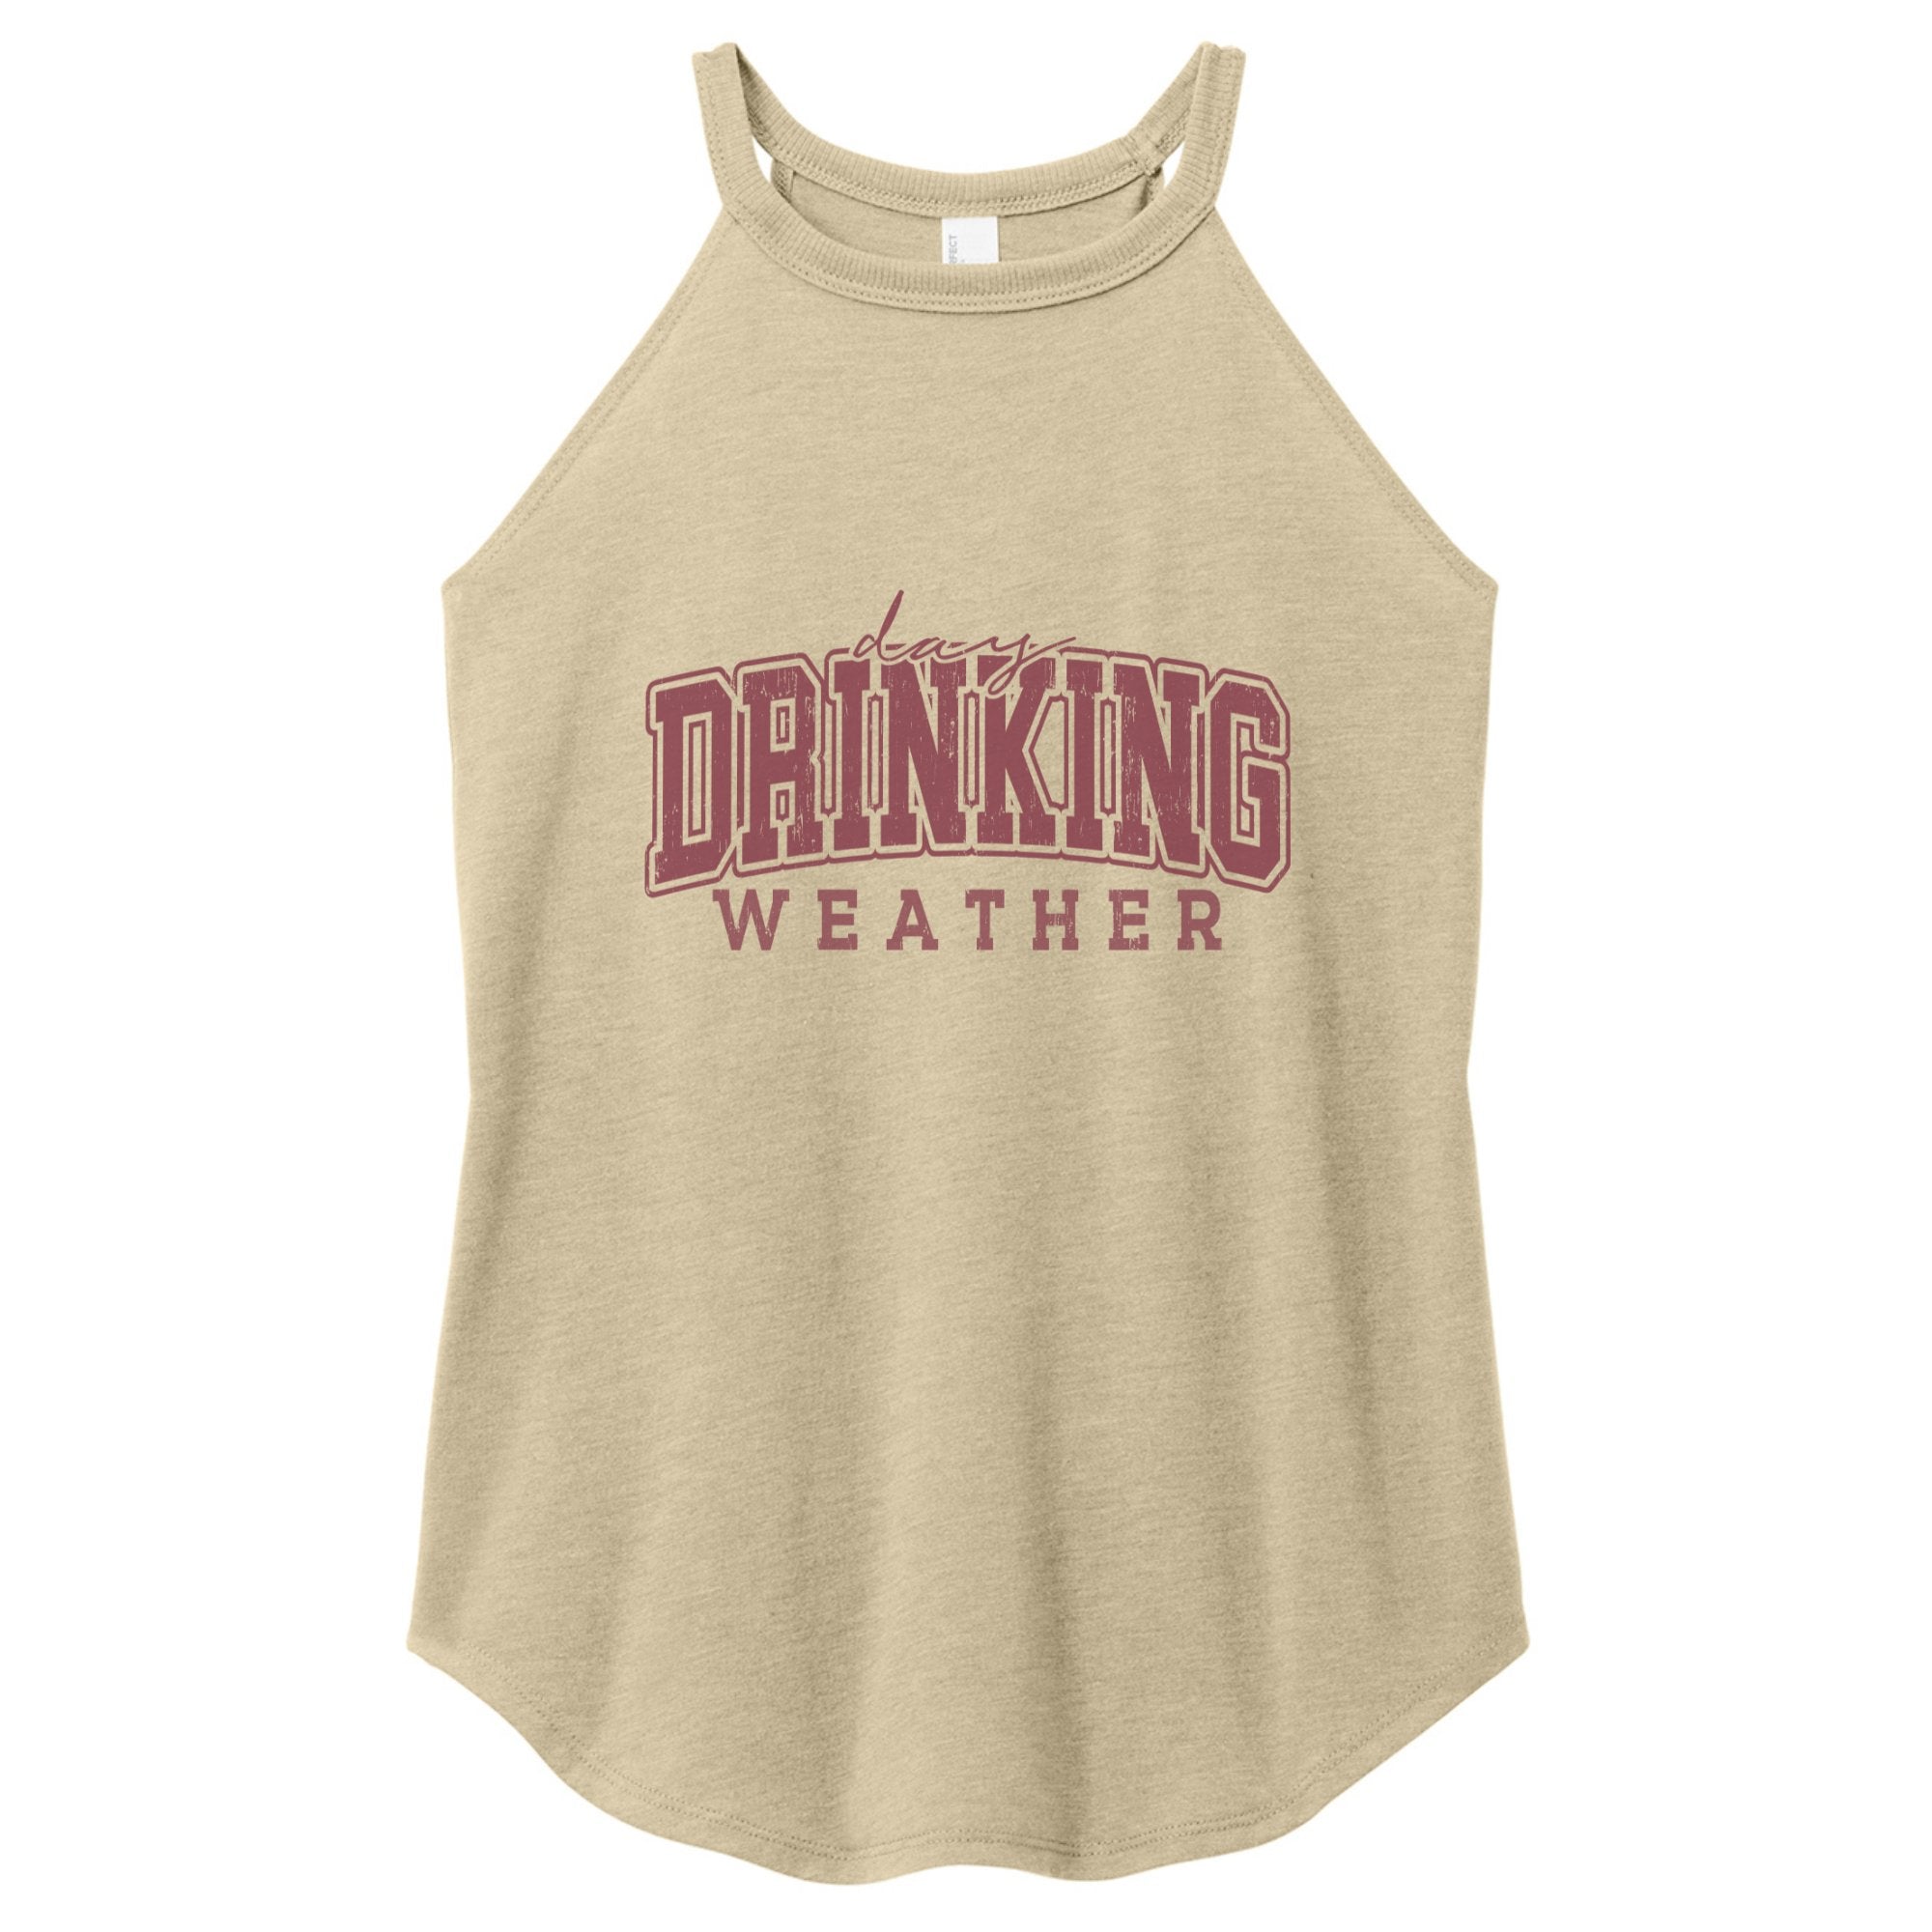 Day Drinking Weather Women's Rocker Tank - Trendznmore